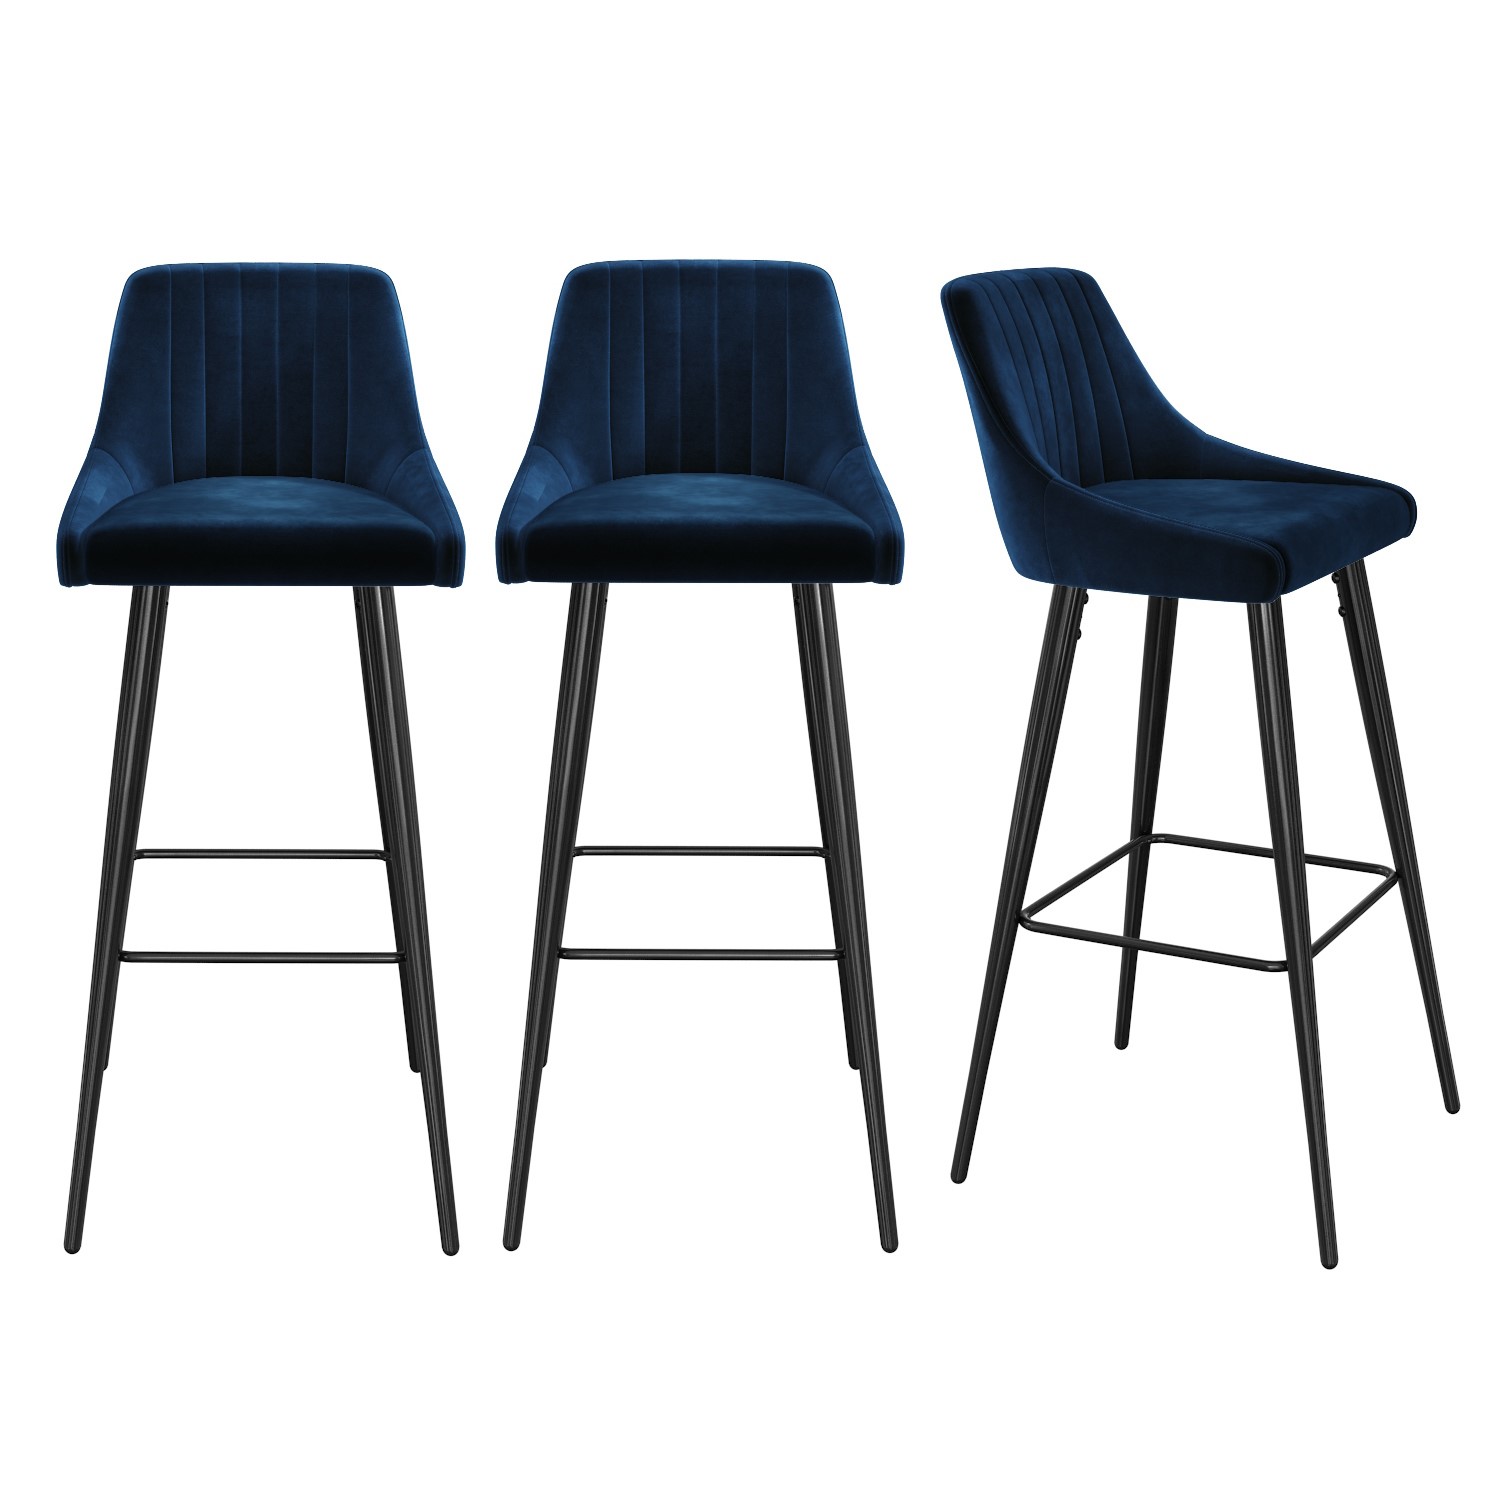 Photo of Set of 3 navy blue velvet bar stools with backs - macie